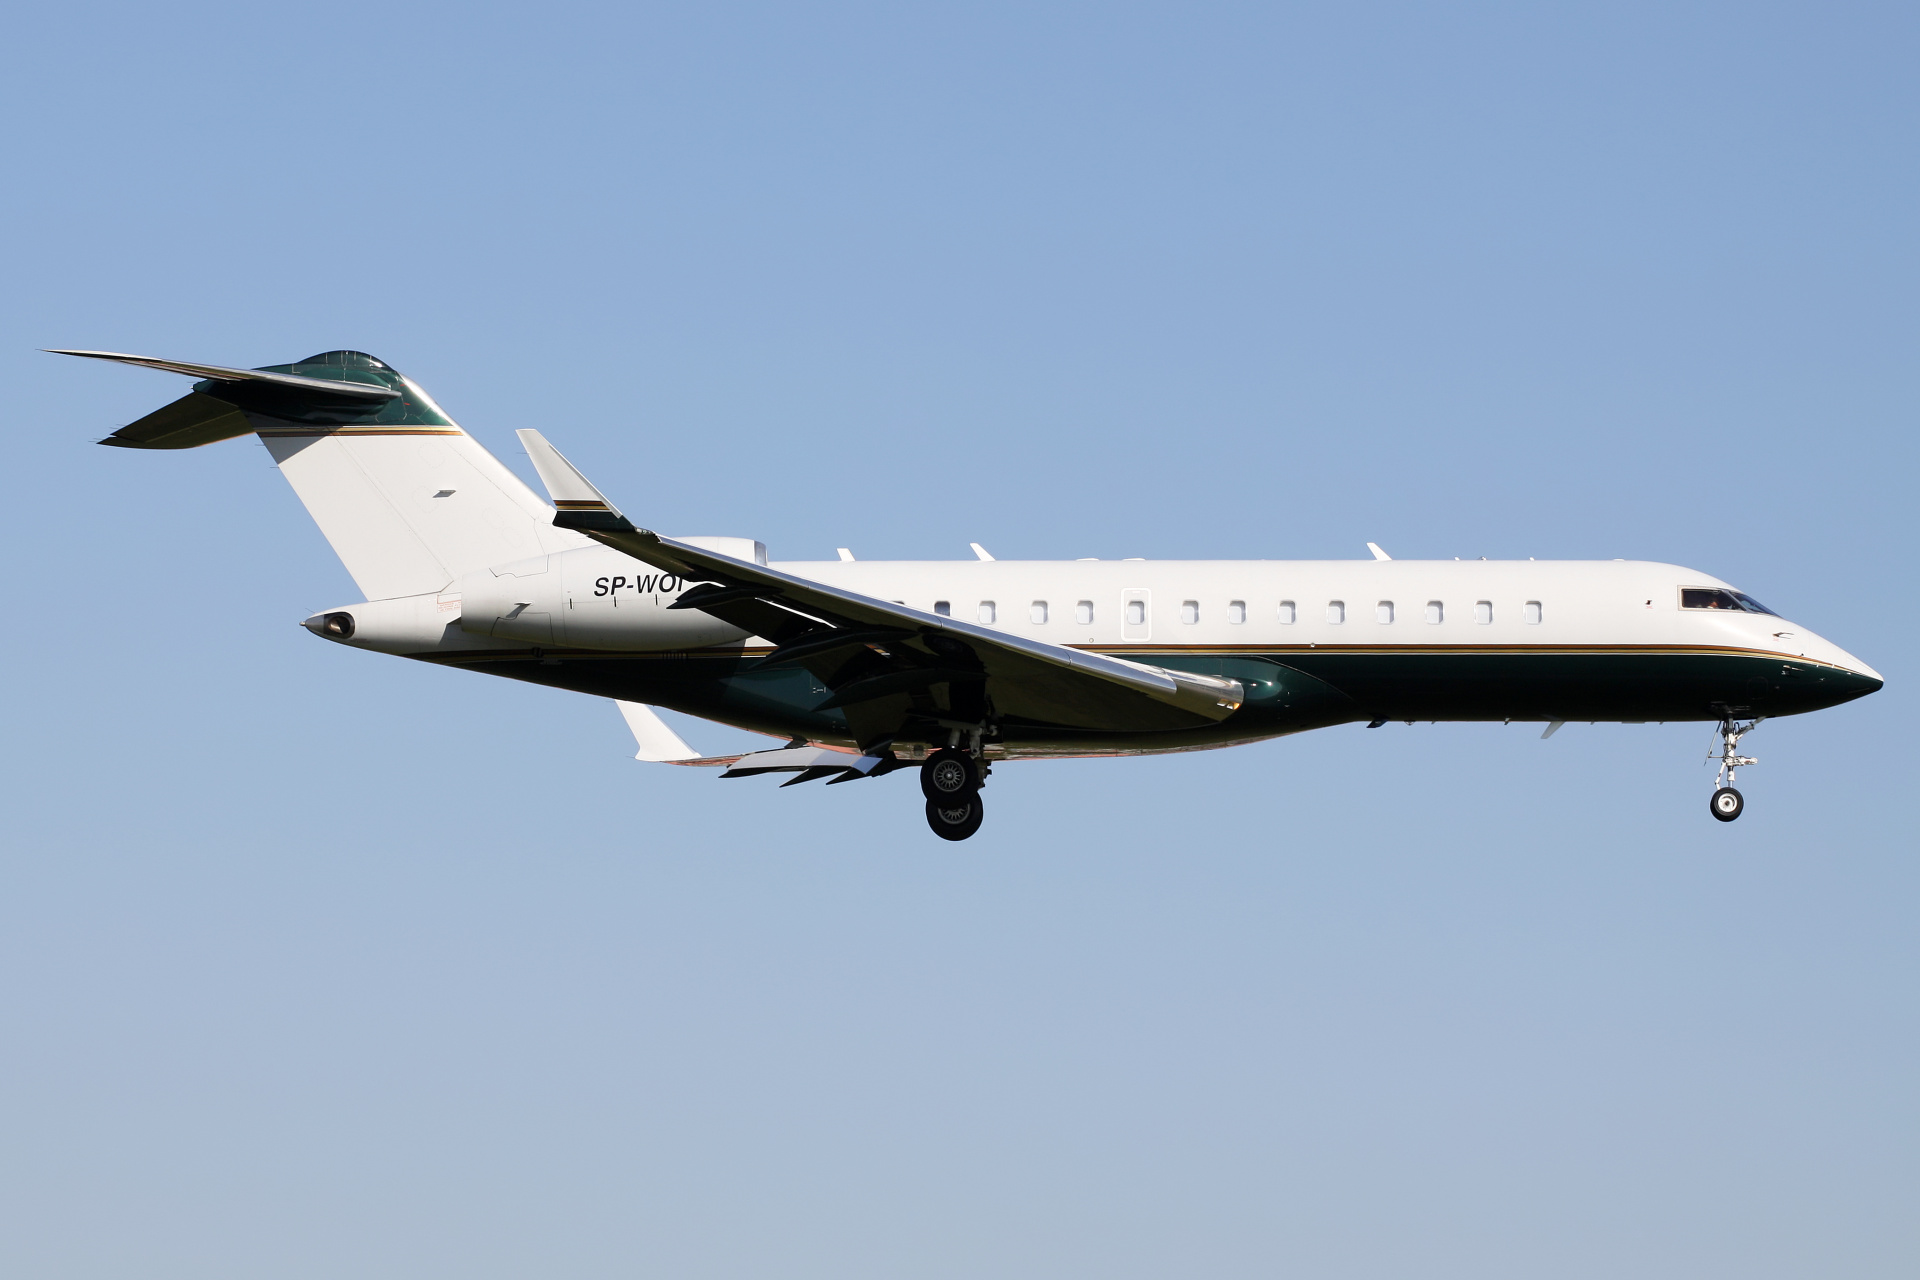 SP-WOI, Jet Story (Aircraft » EPWA Spotting » Bombardier BD-700 Global Express)